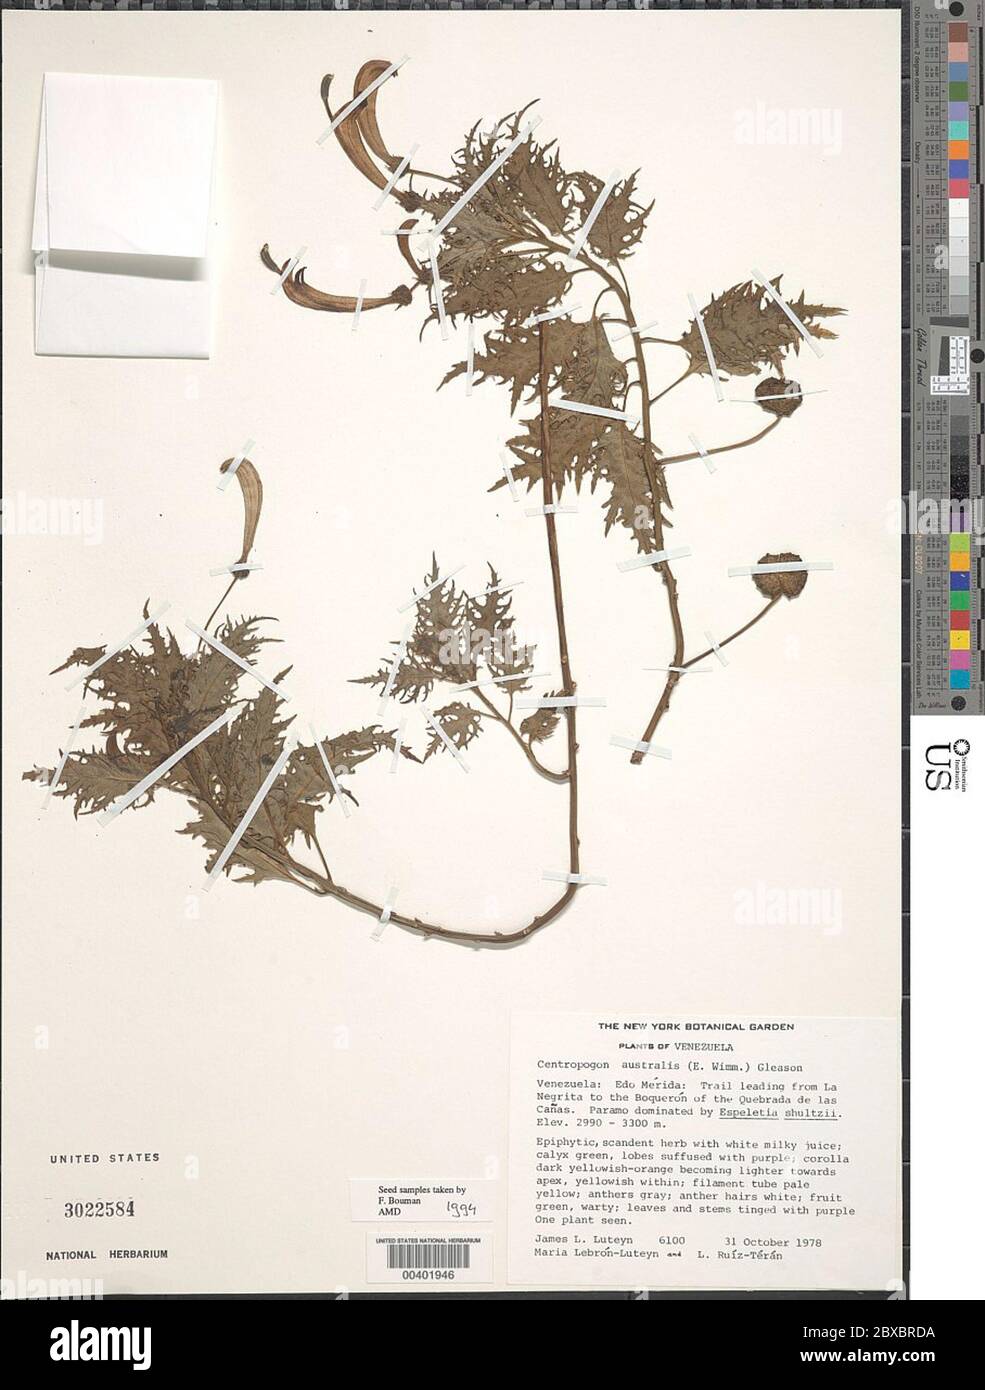 Centropogon australis E Wimm Gleason Centropogon australis E Wimm Gleason. Stock Photo